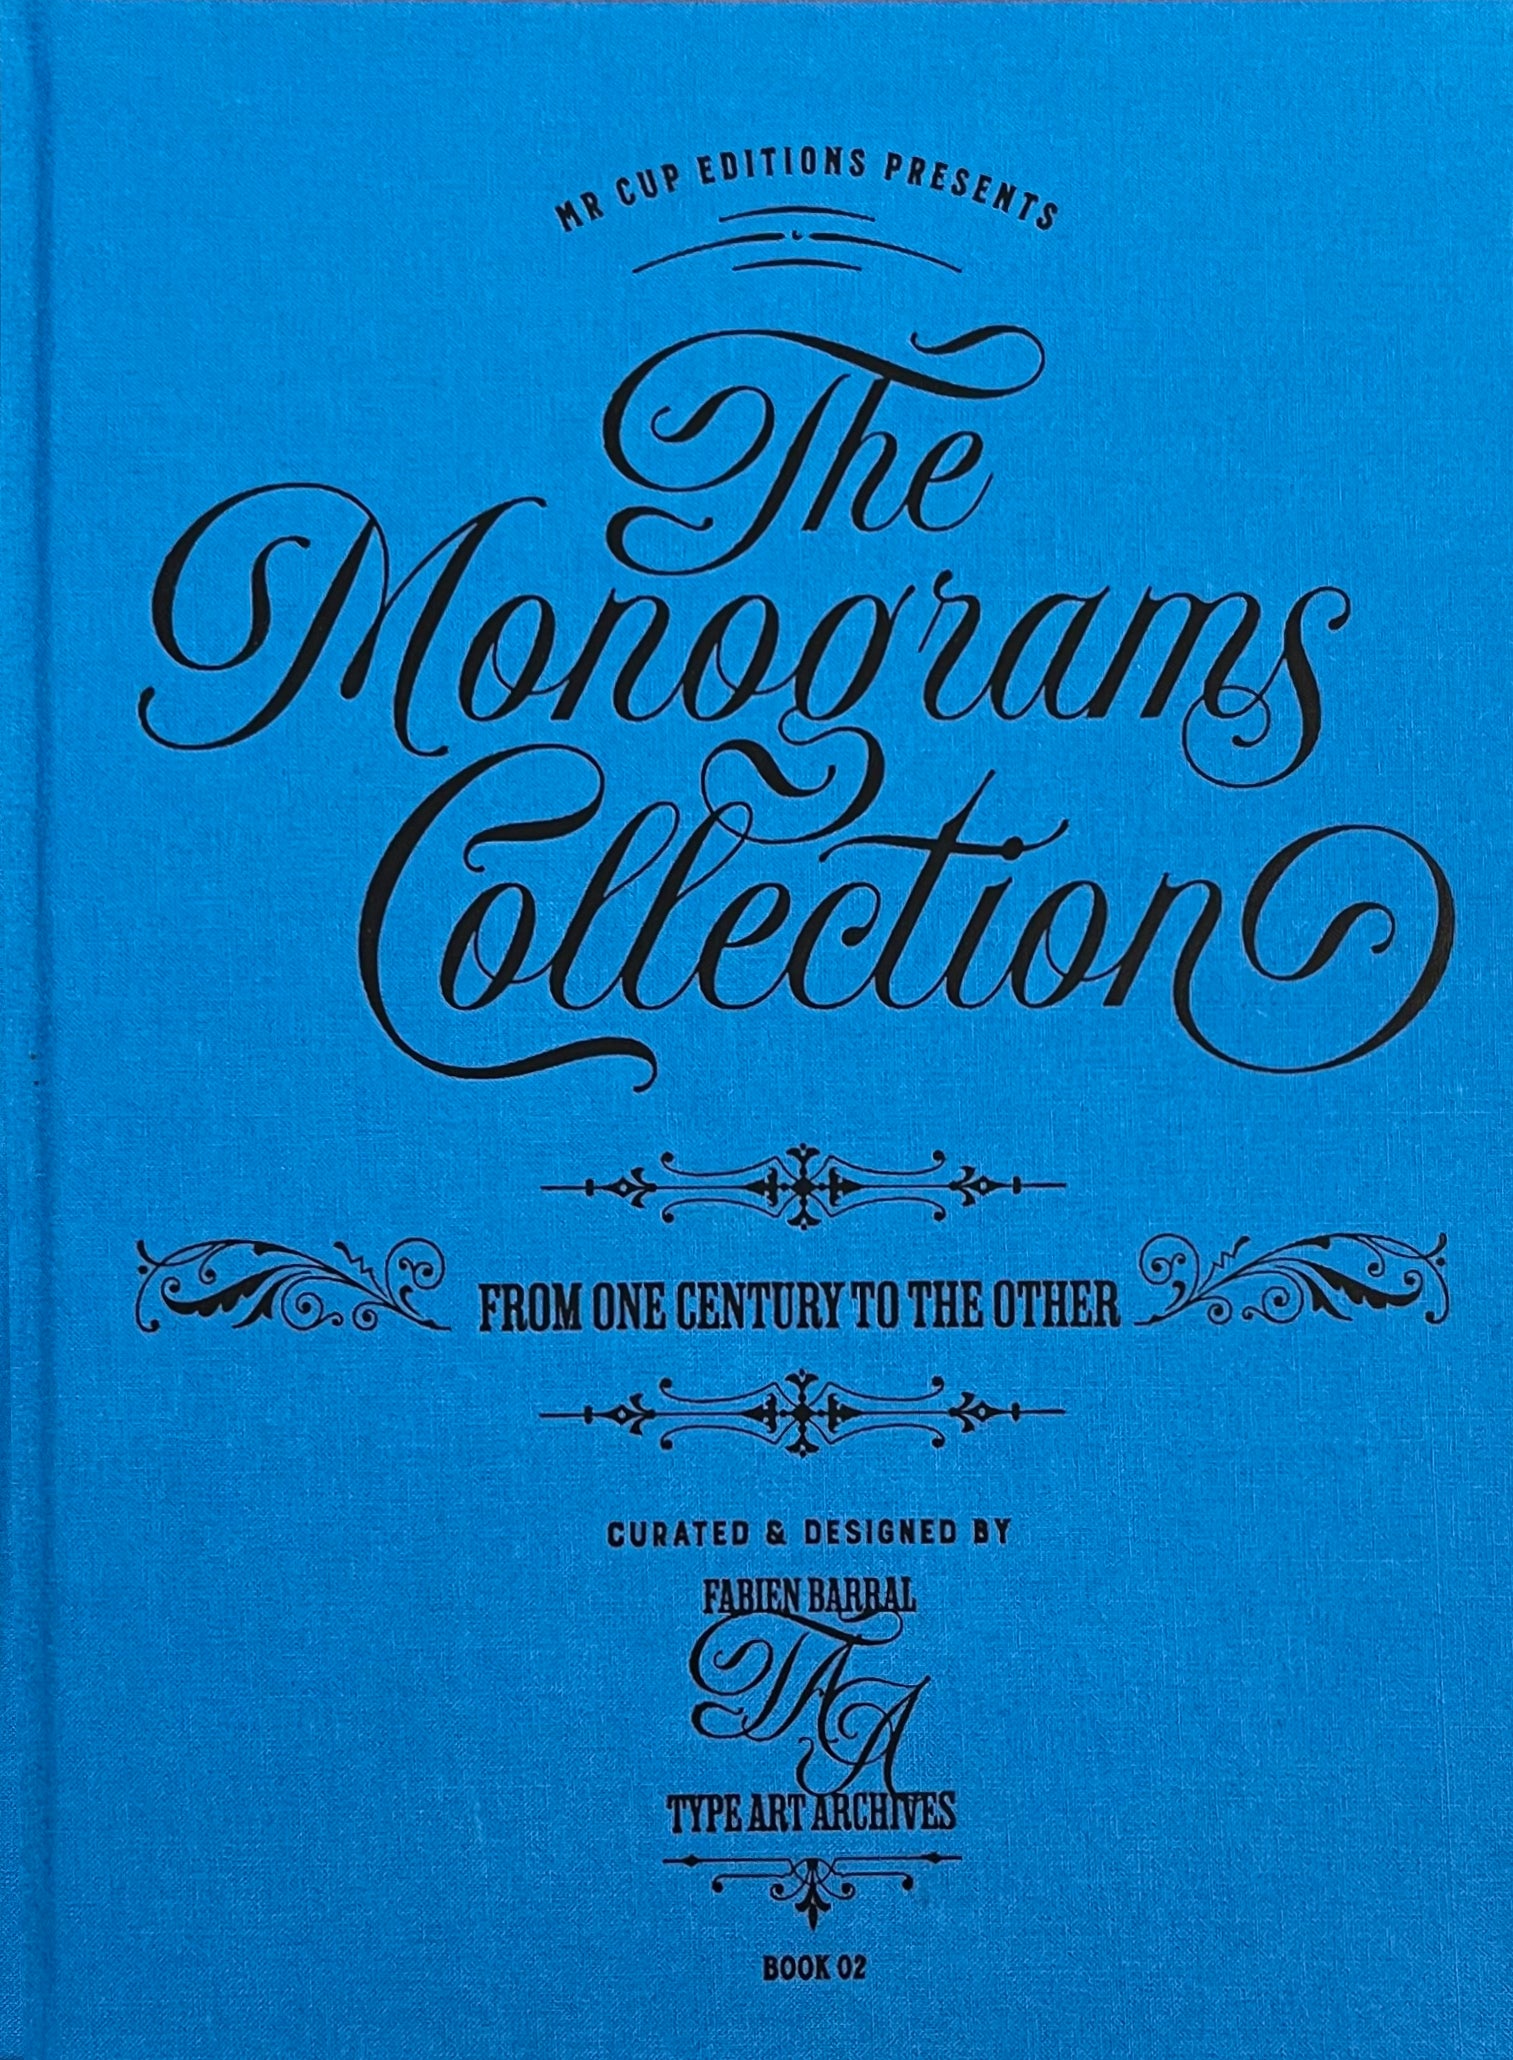 THE MONOGRAMS COLLECTION BOOK